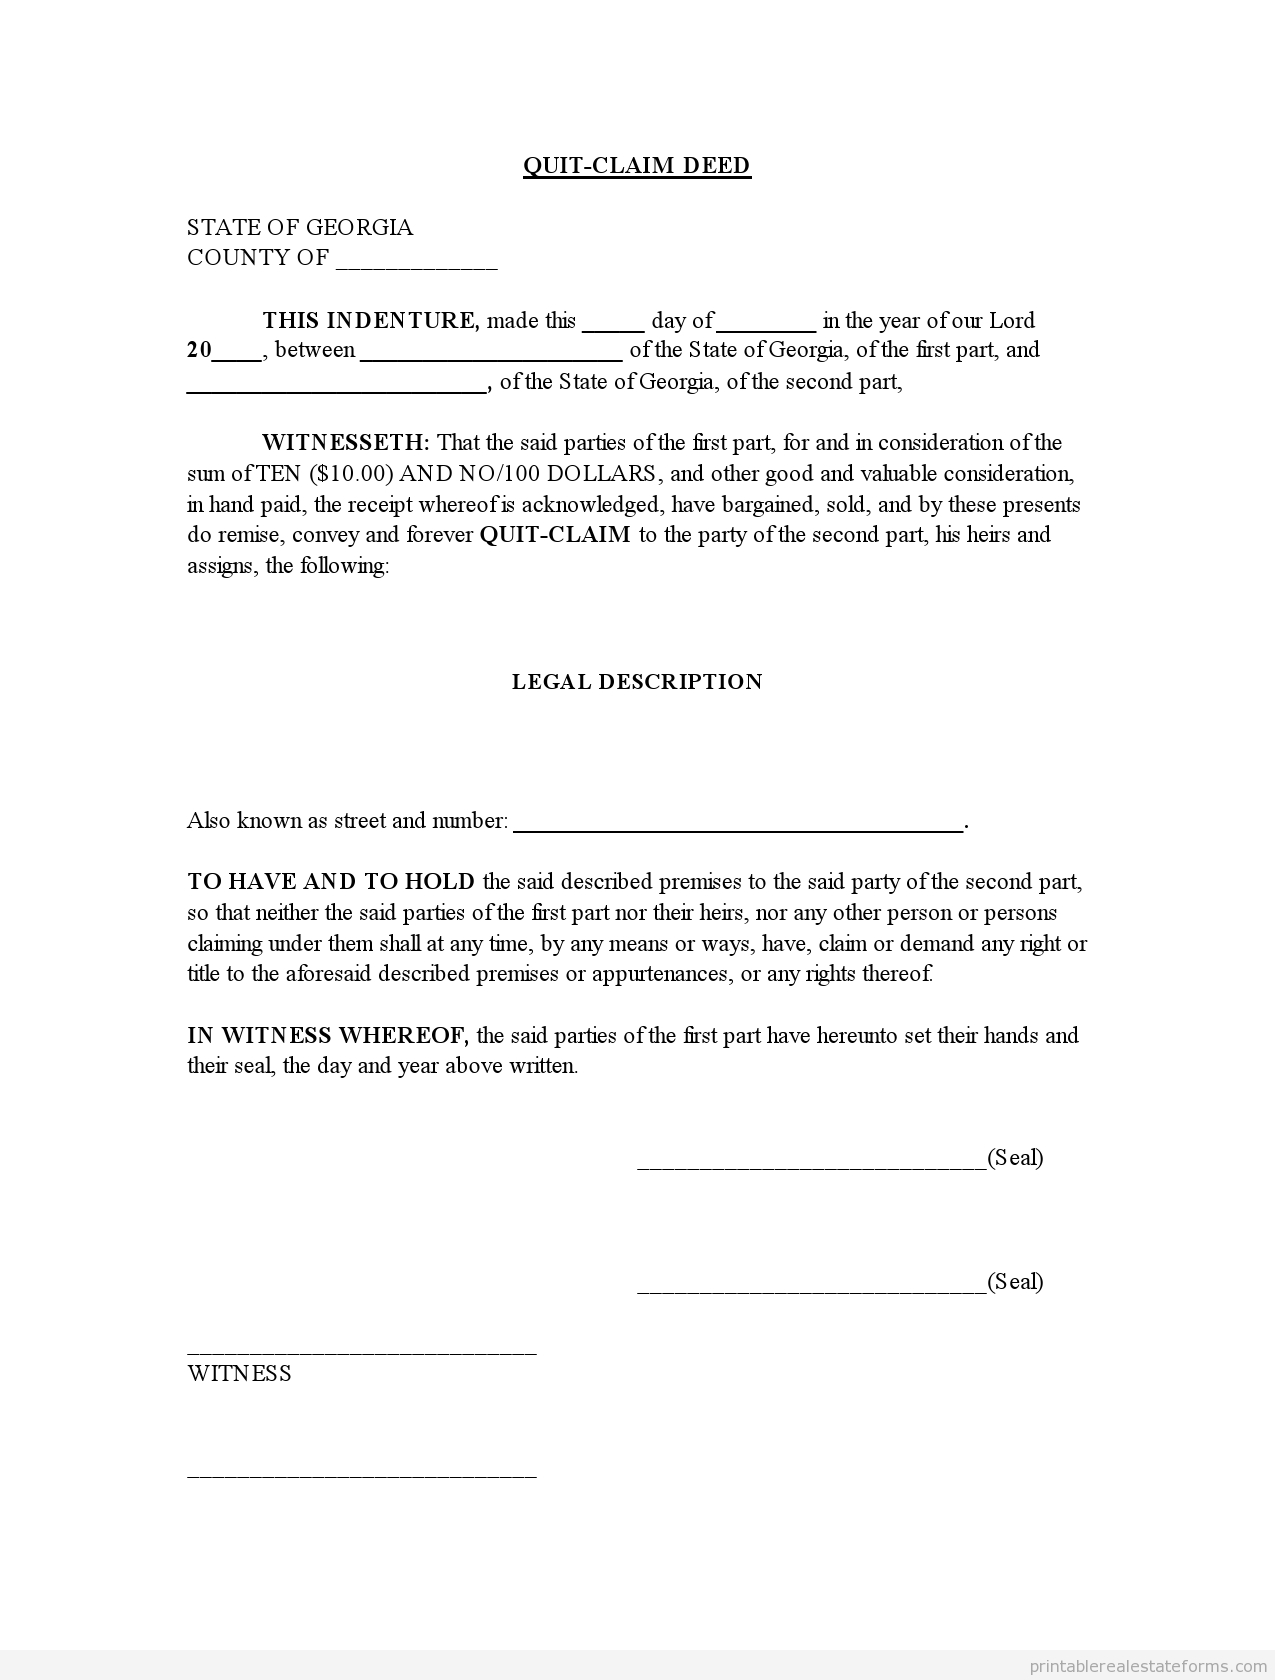 Printable Quit Claim Deed Template 2015 | Sample Forms 2015 - Free Printable Quit Claim Deed Form